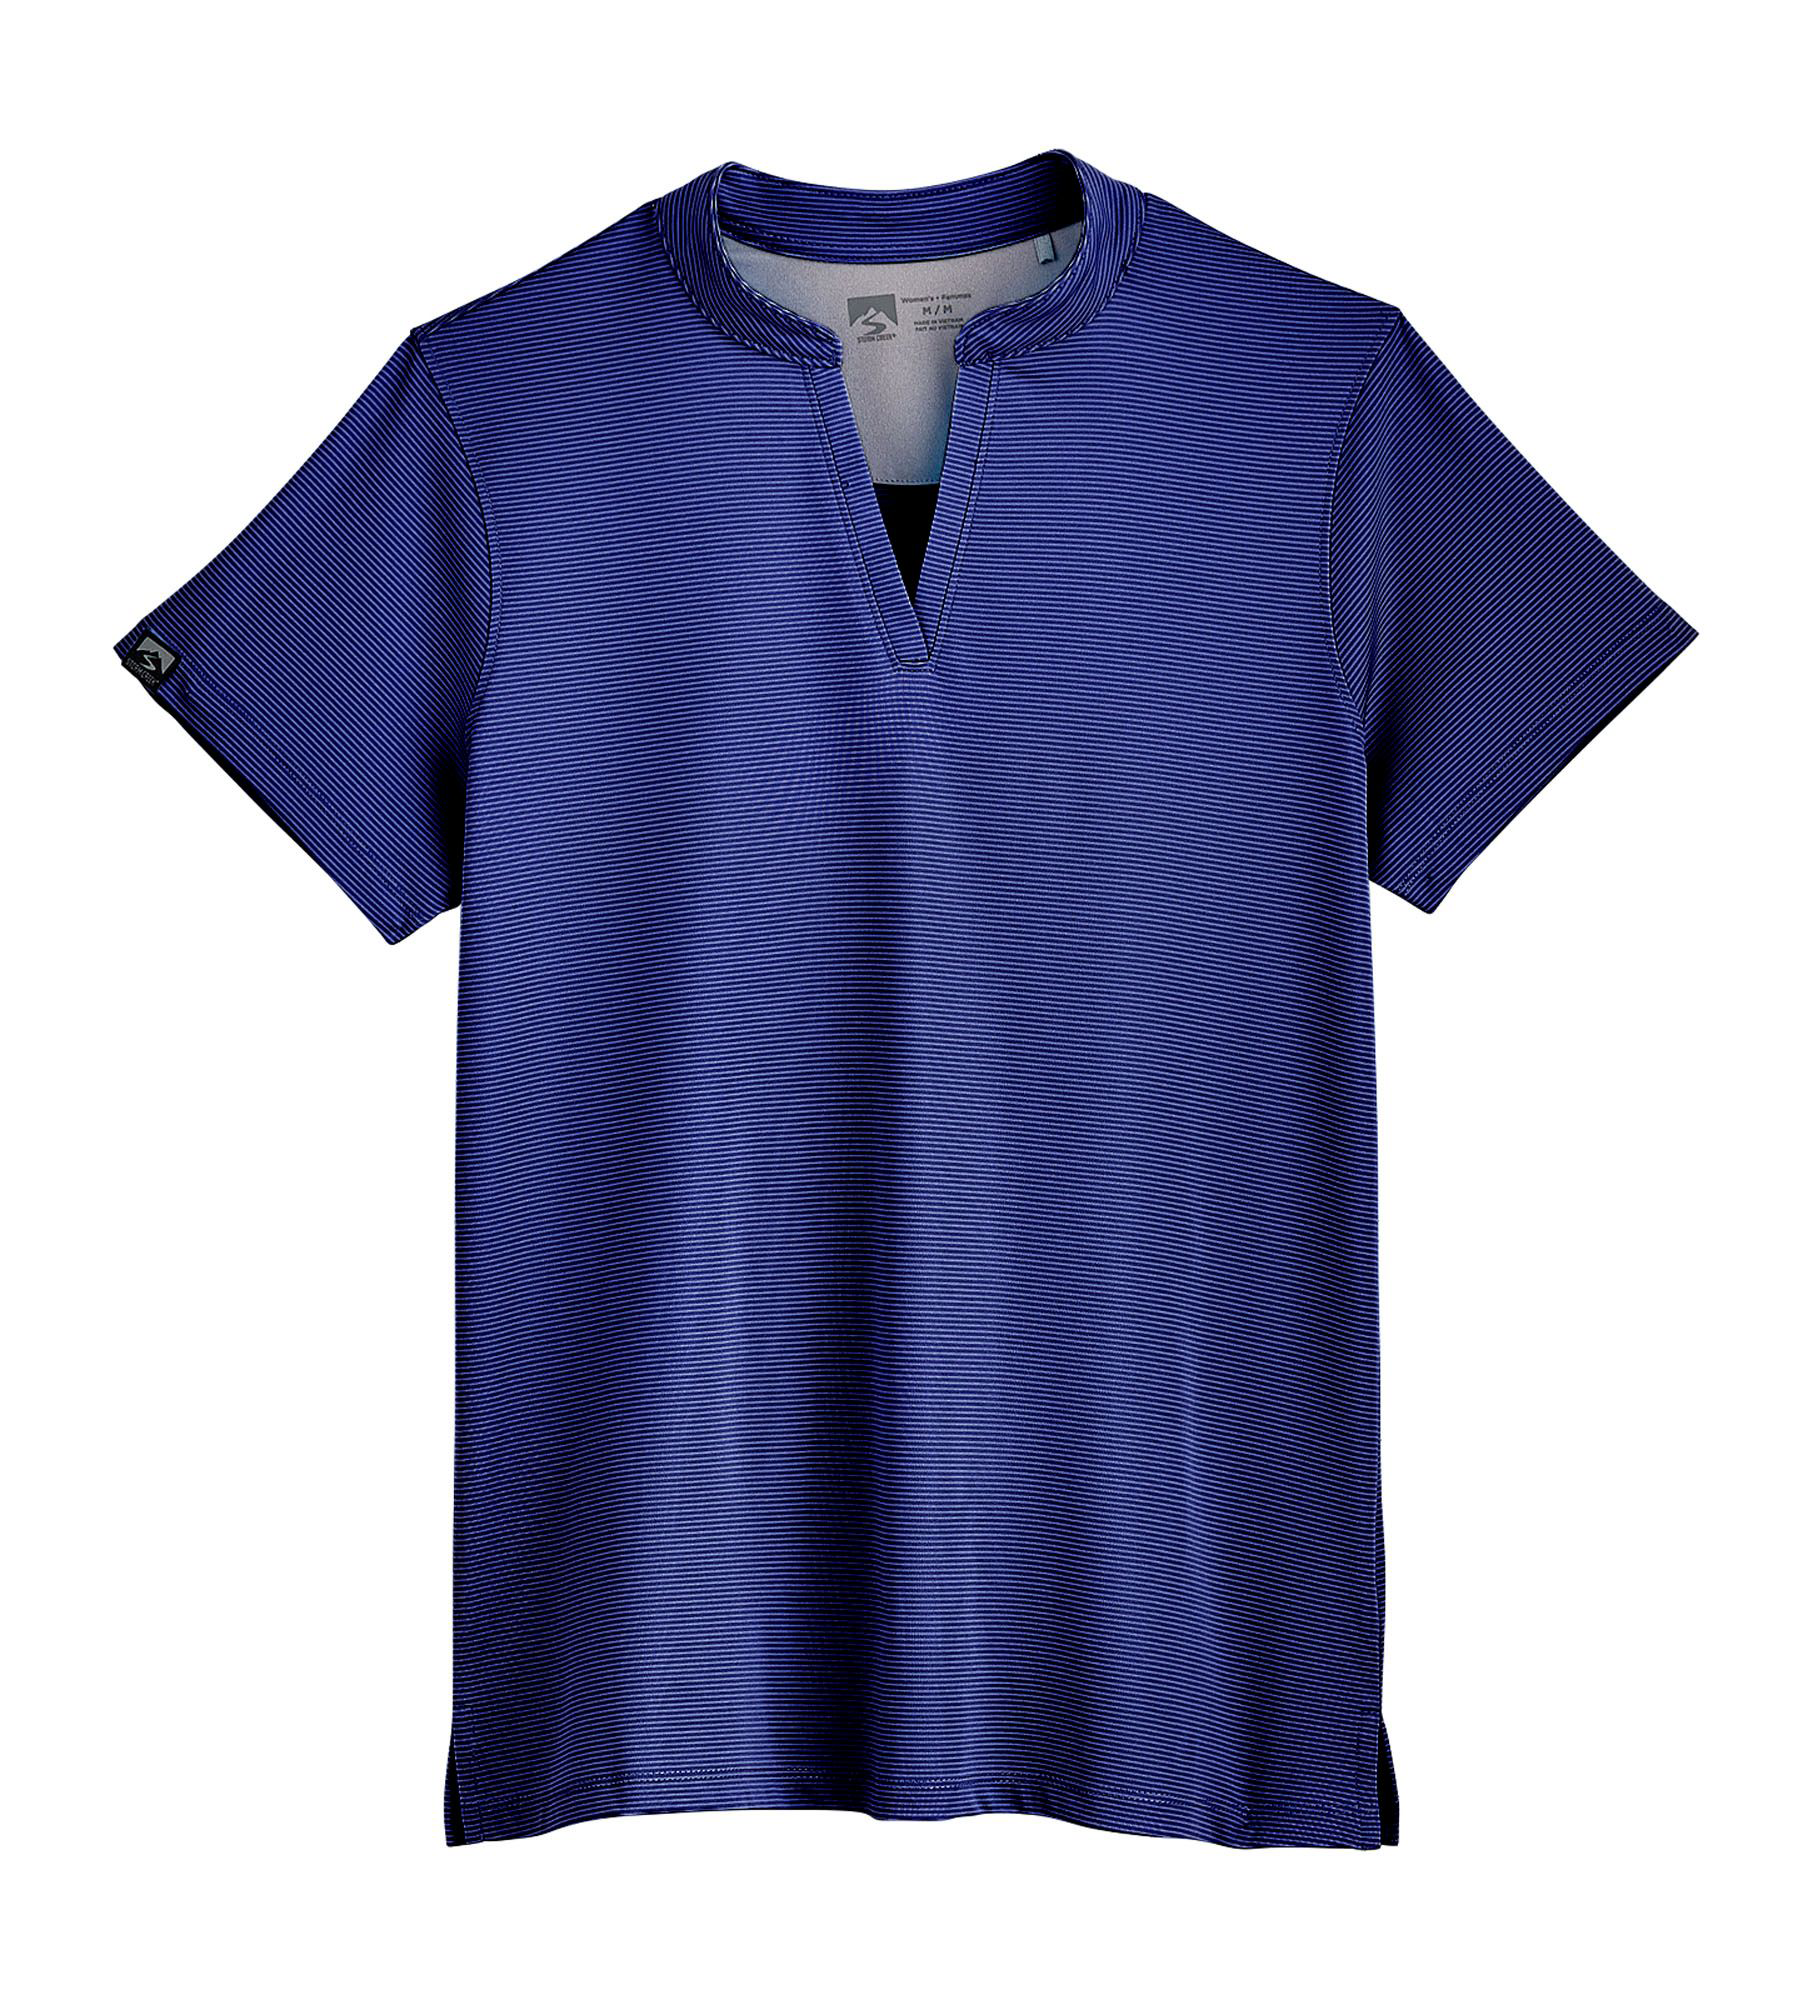 Storm Creek Optimist Short-Sleeve Polo Shirt for Ladies - Navy - L